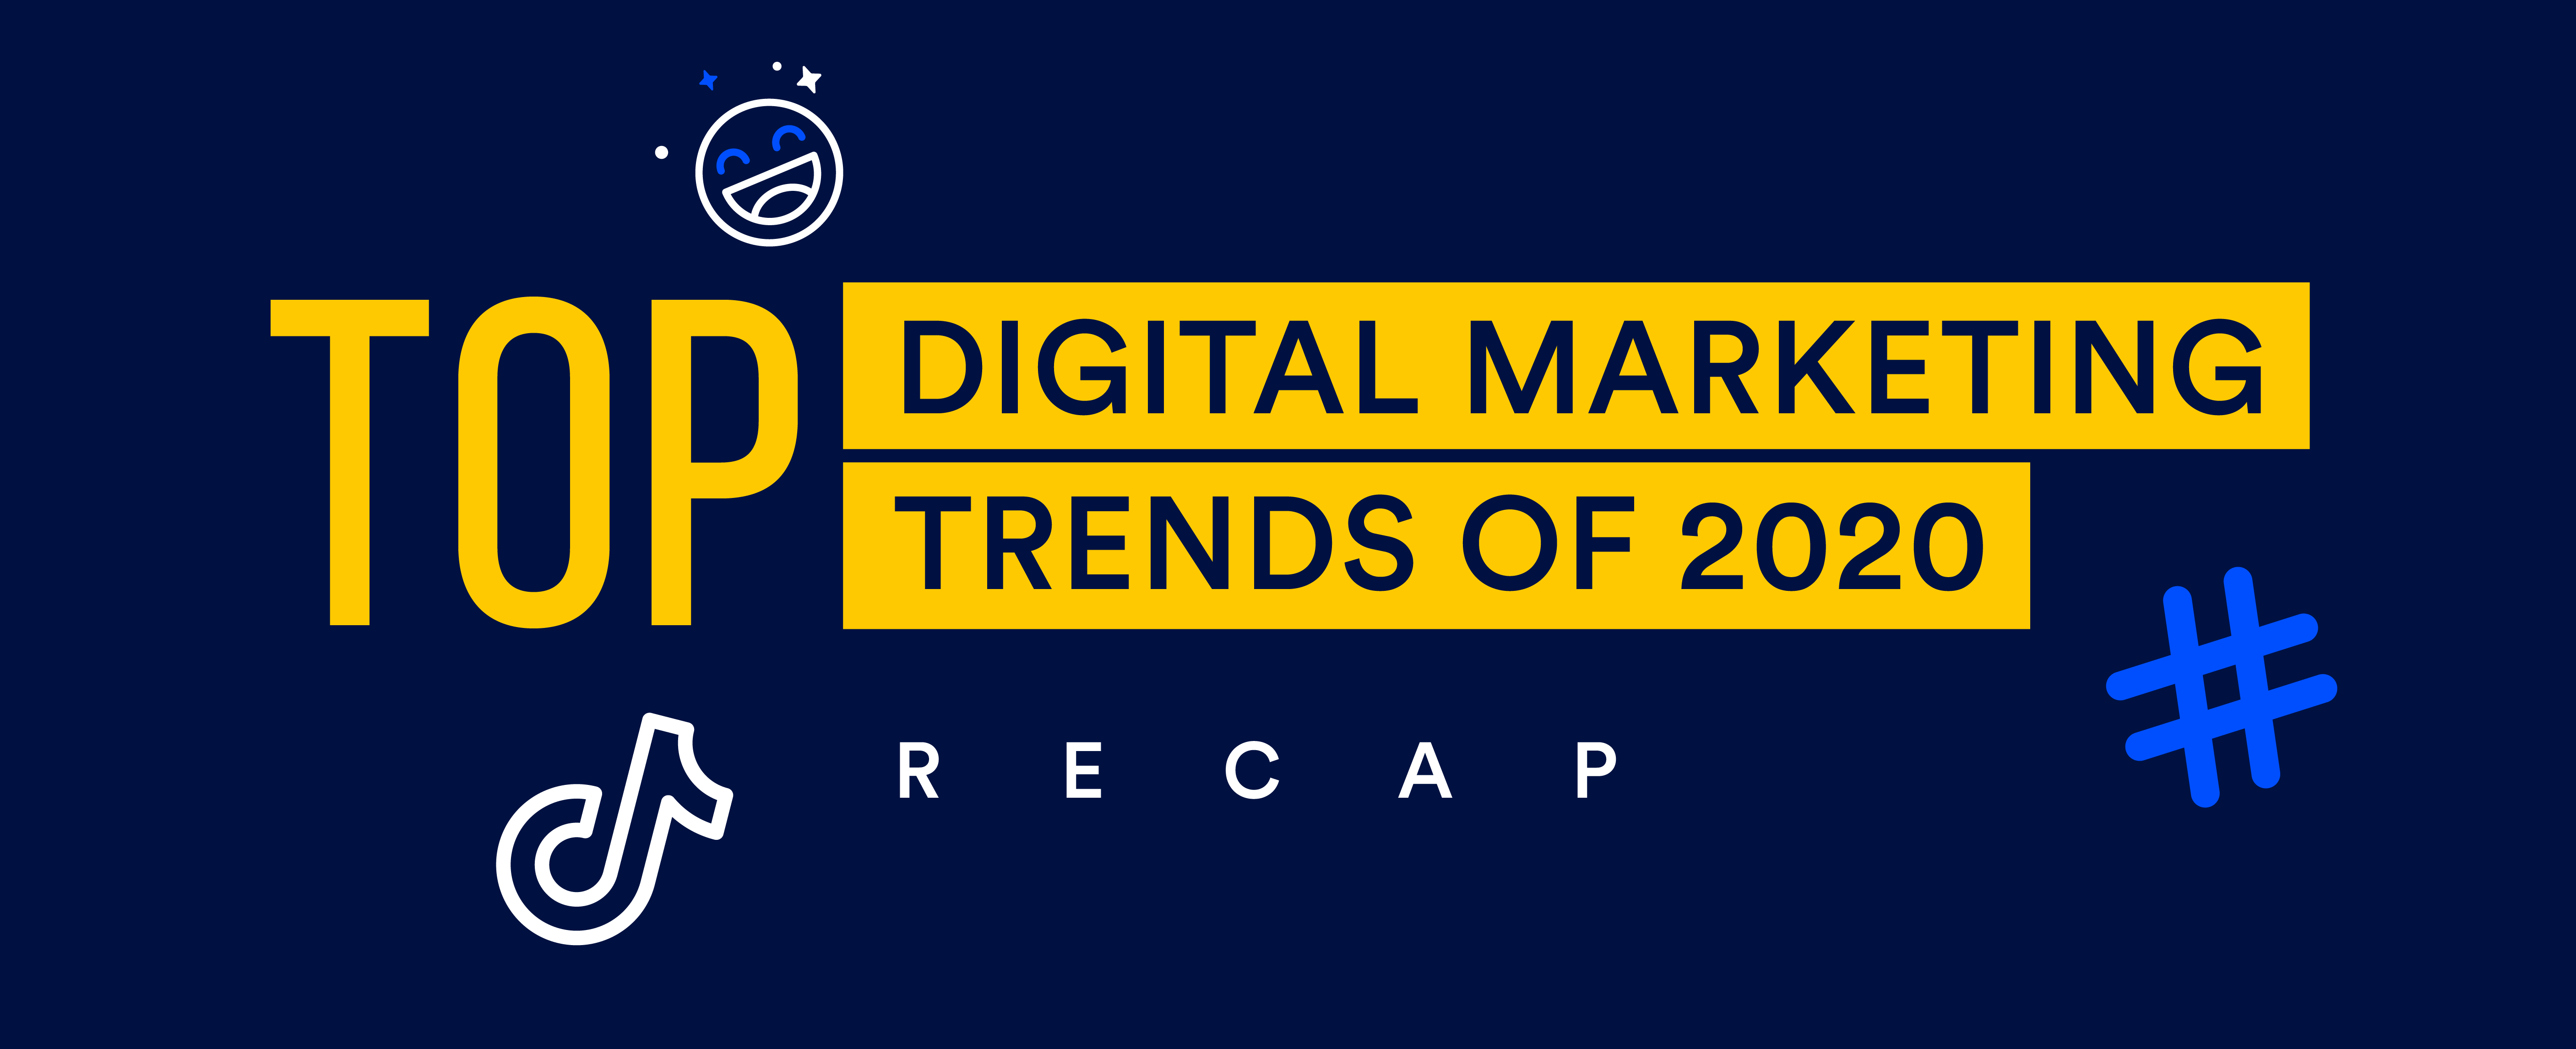 Top Digital Marketing trends of 2020